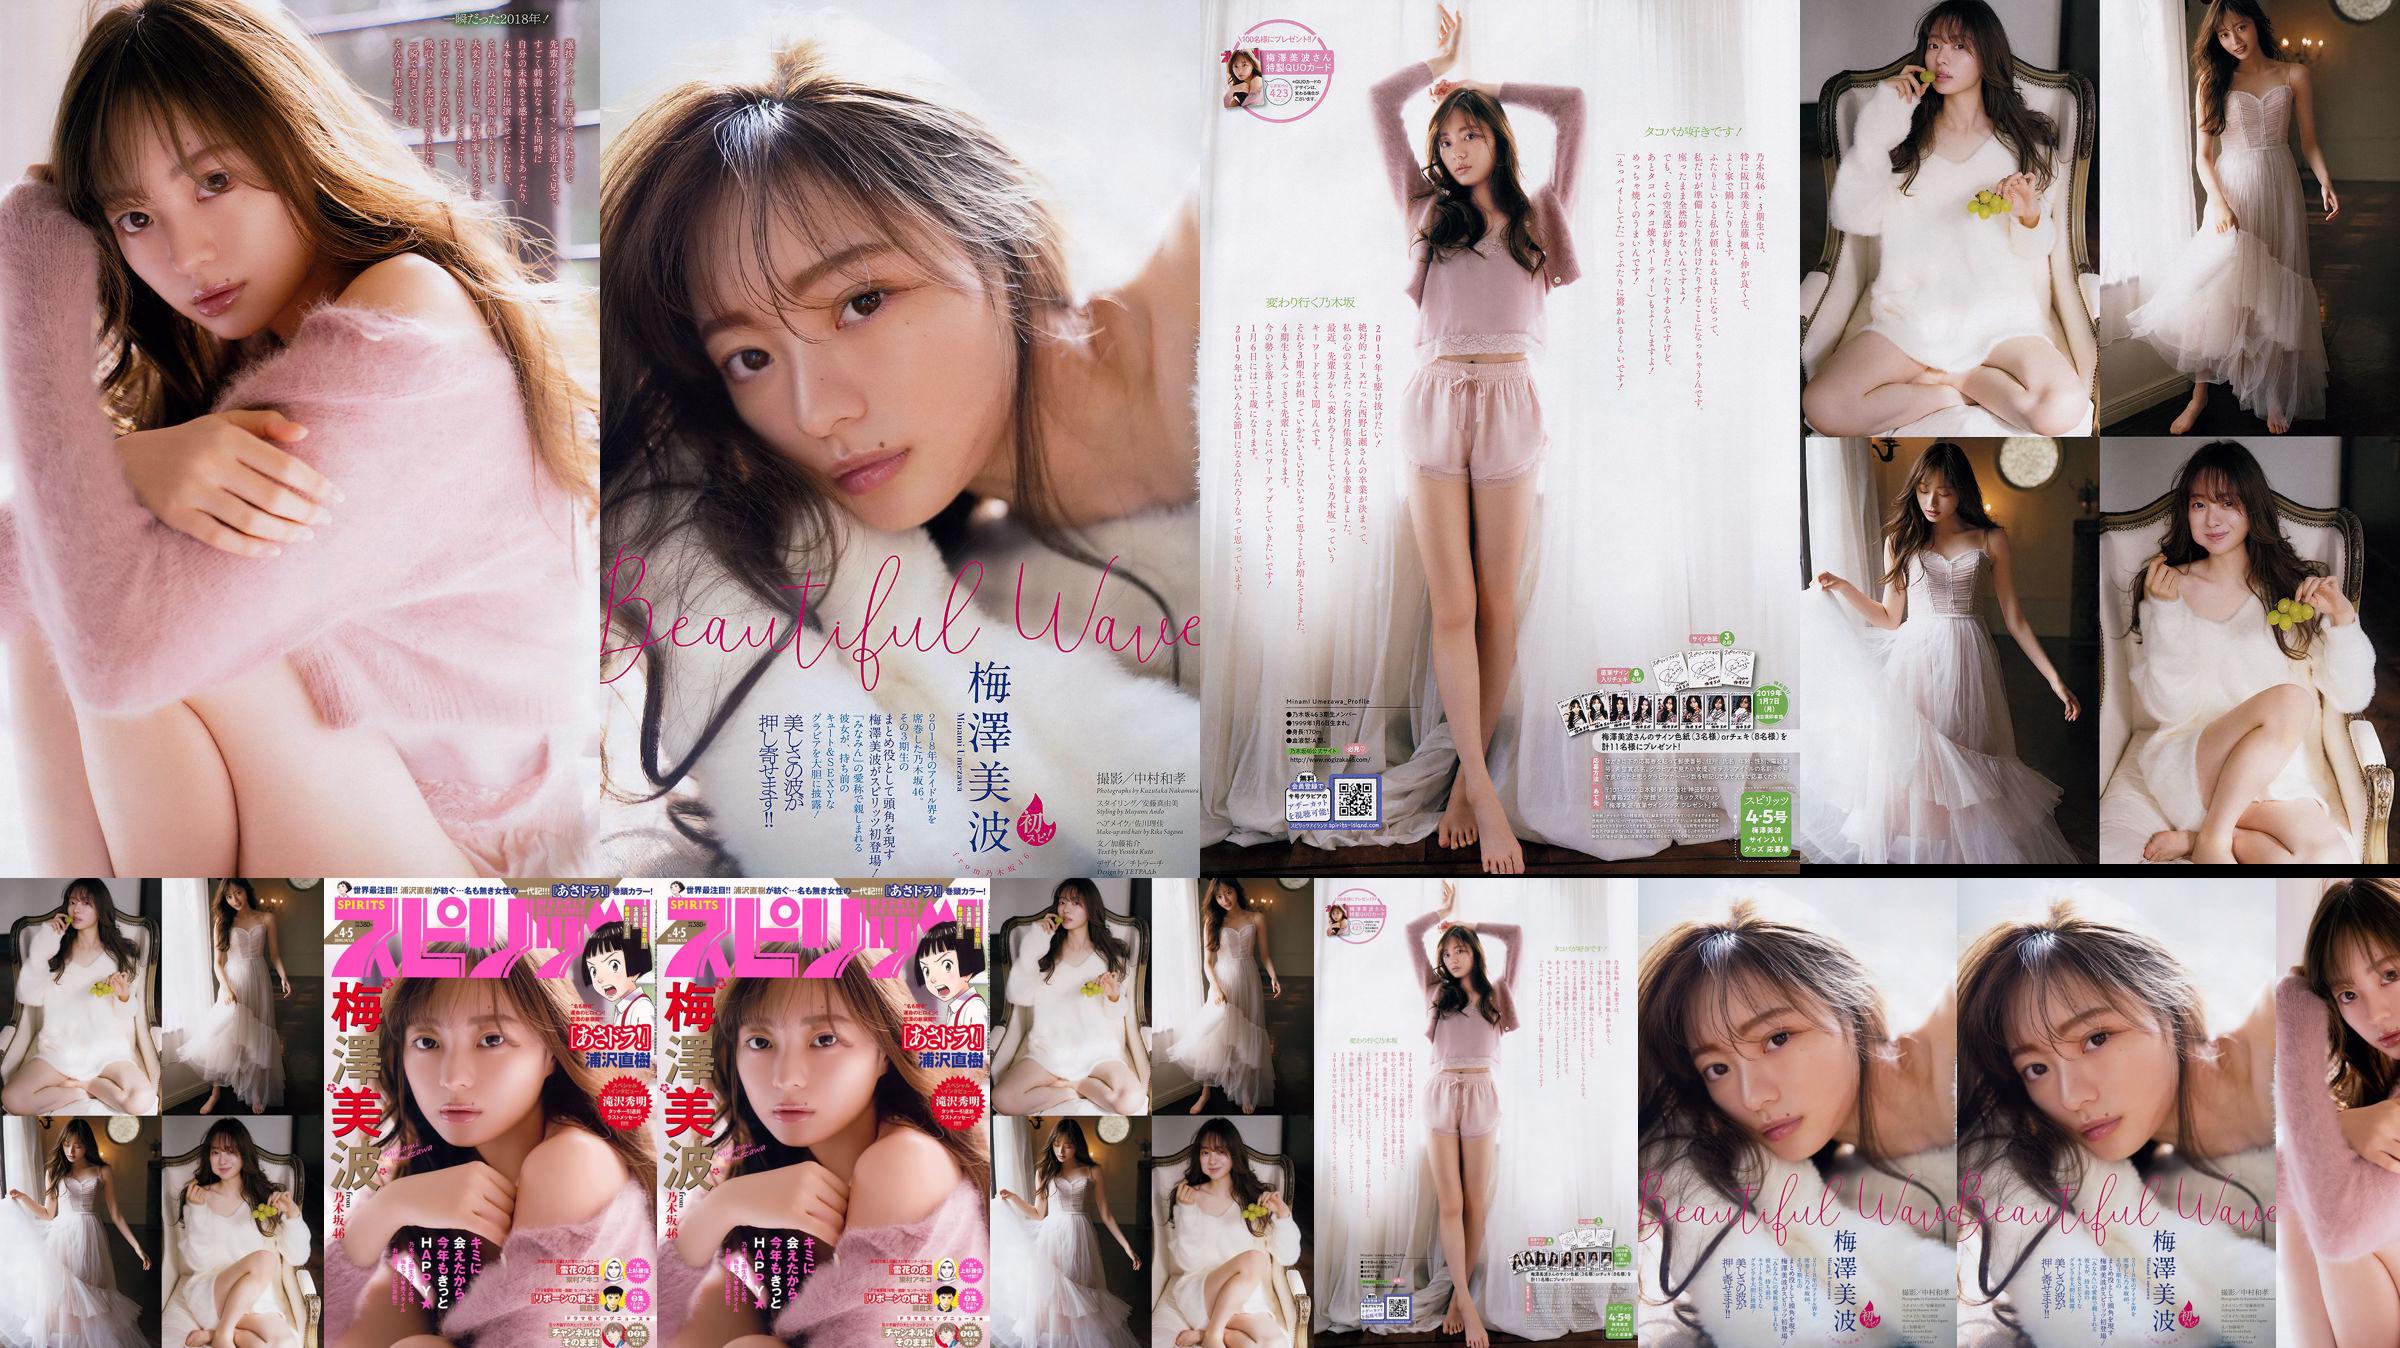 [Semangat Komik Besar Mingguan] Minami Umezawa 2019 Majalah Foto No. 04-05 No.cd6b8a Halaman 1